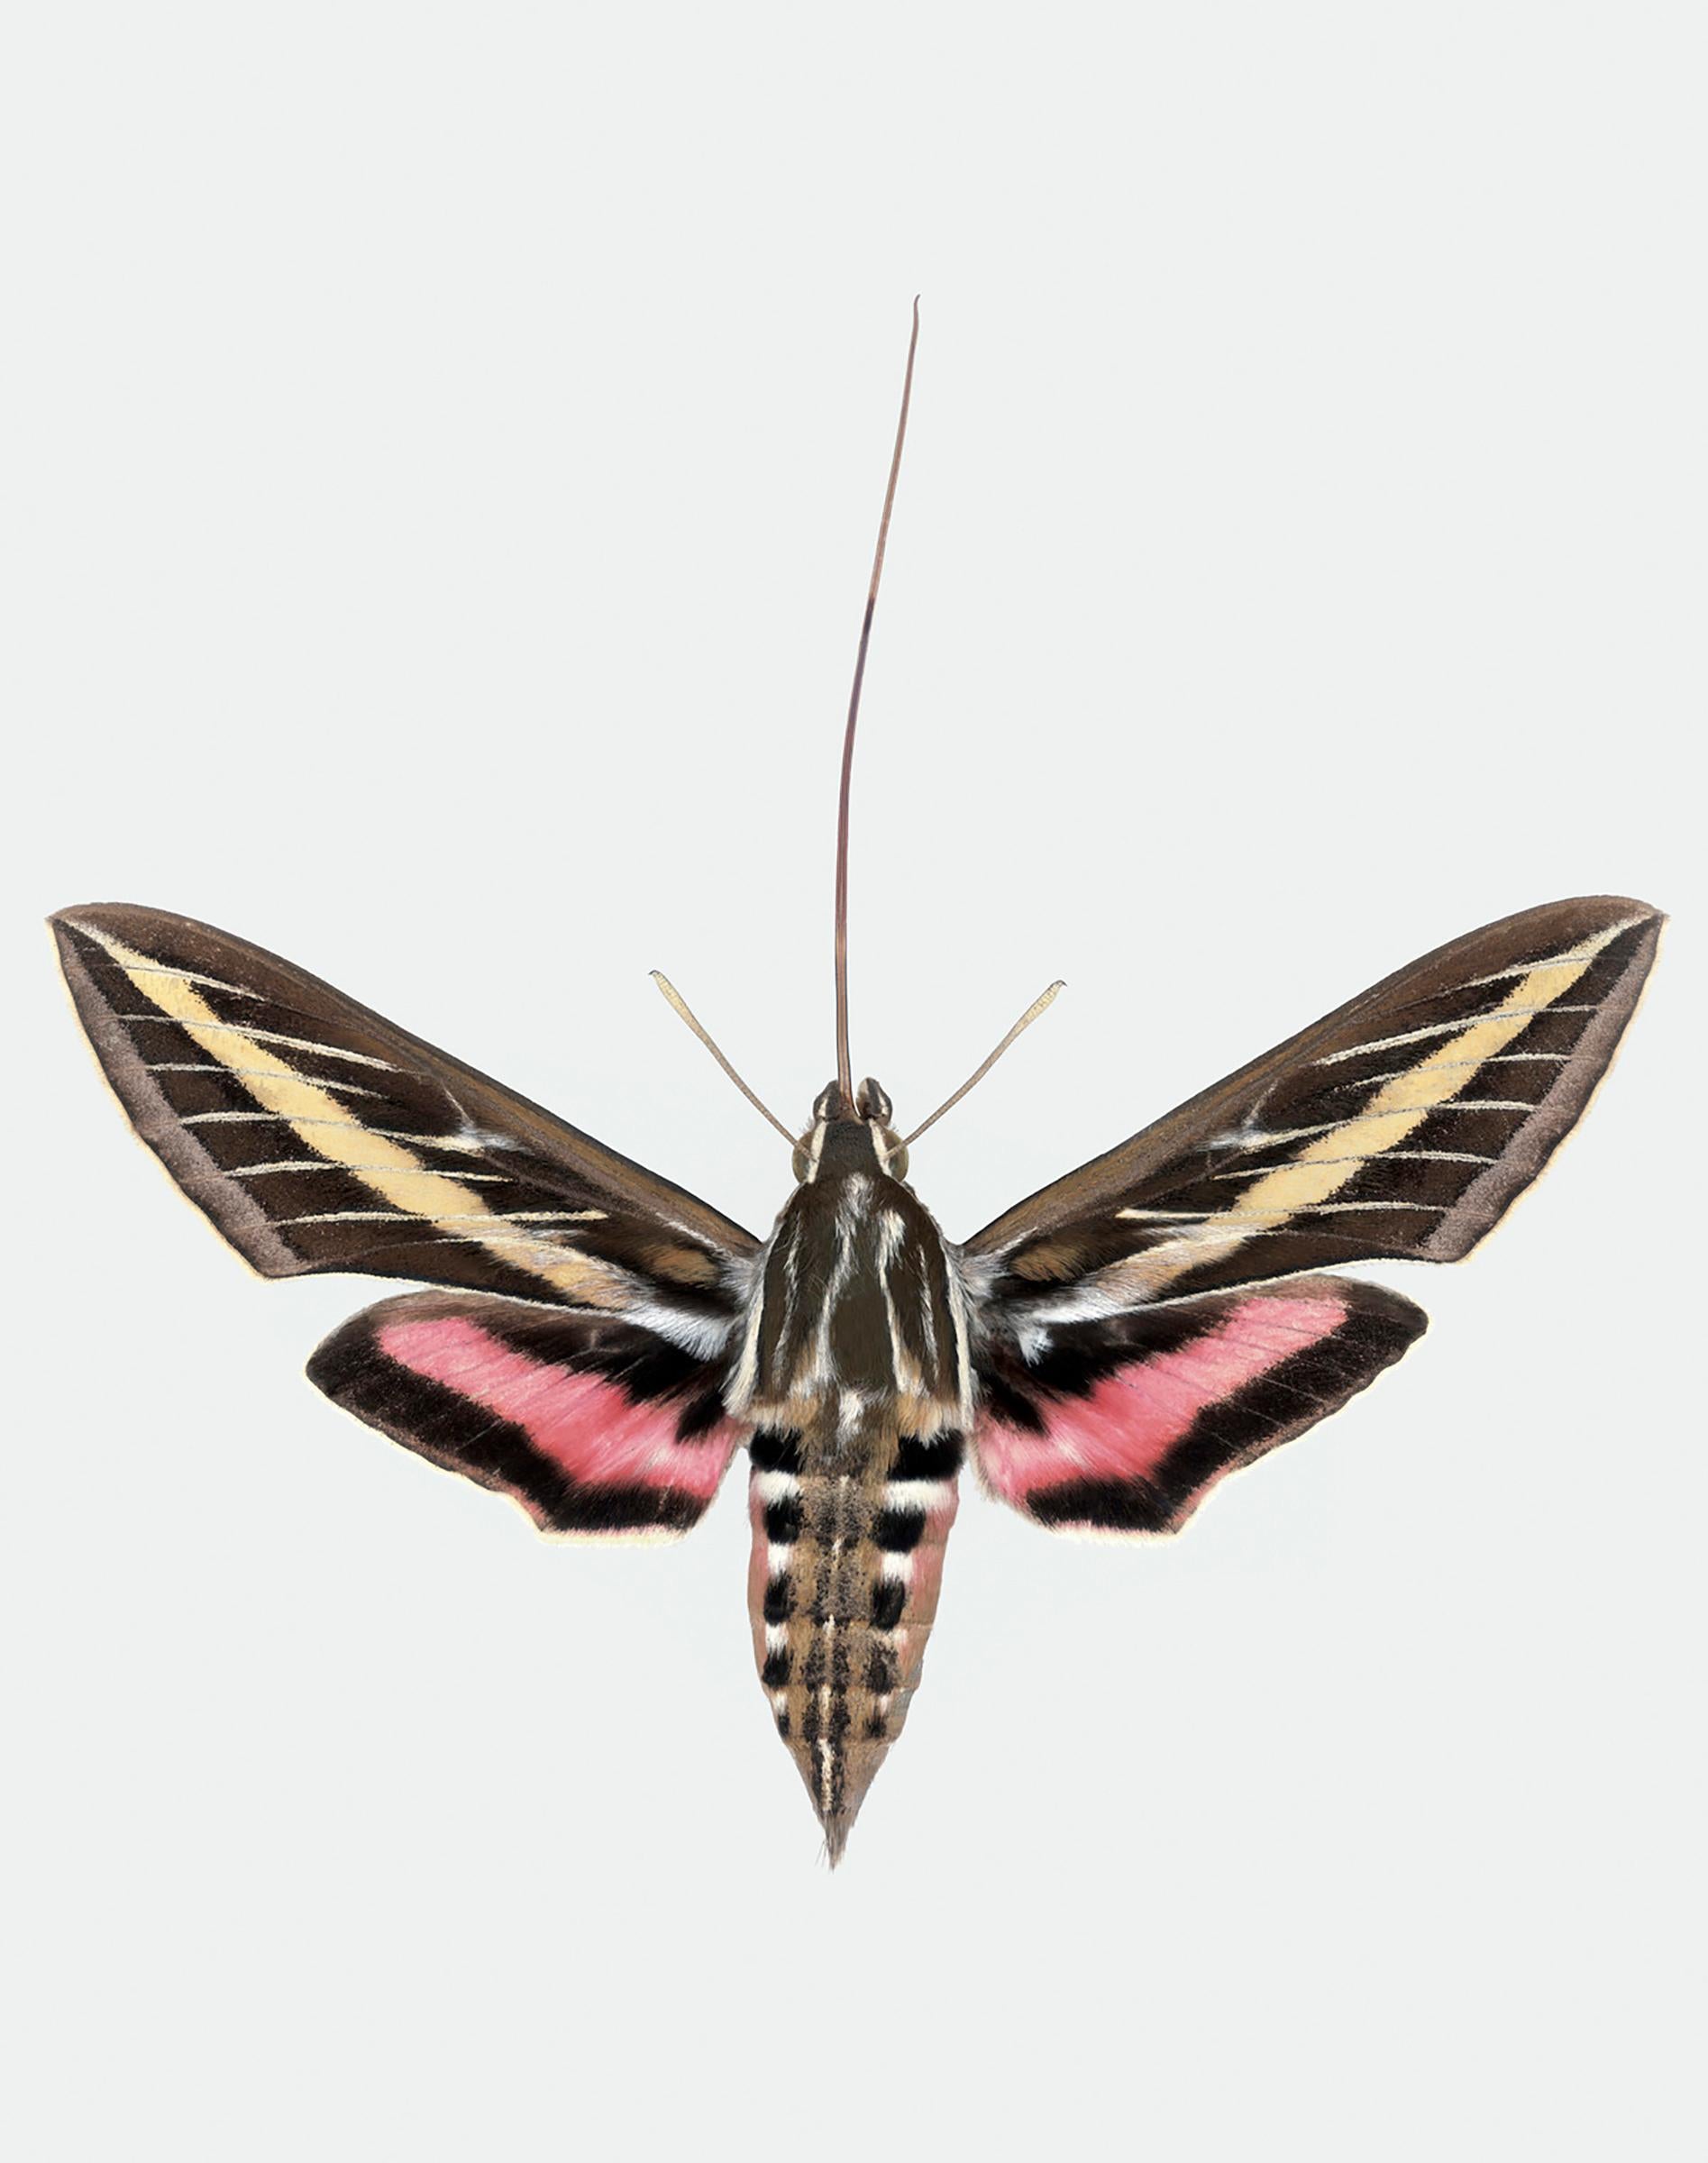 Joseph Scheer Color Photograph – Hyles Lineata, Gelb, Rosa, Braun, Weiß Nature Motte Insekt Fotografie